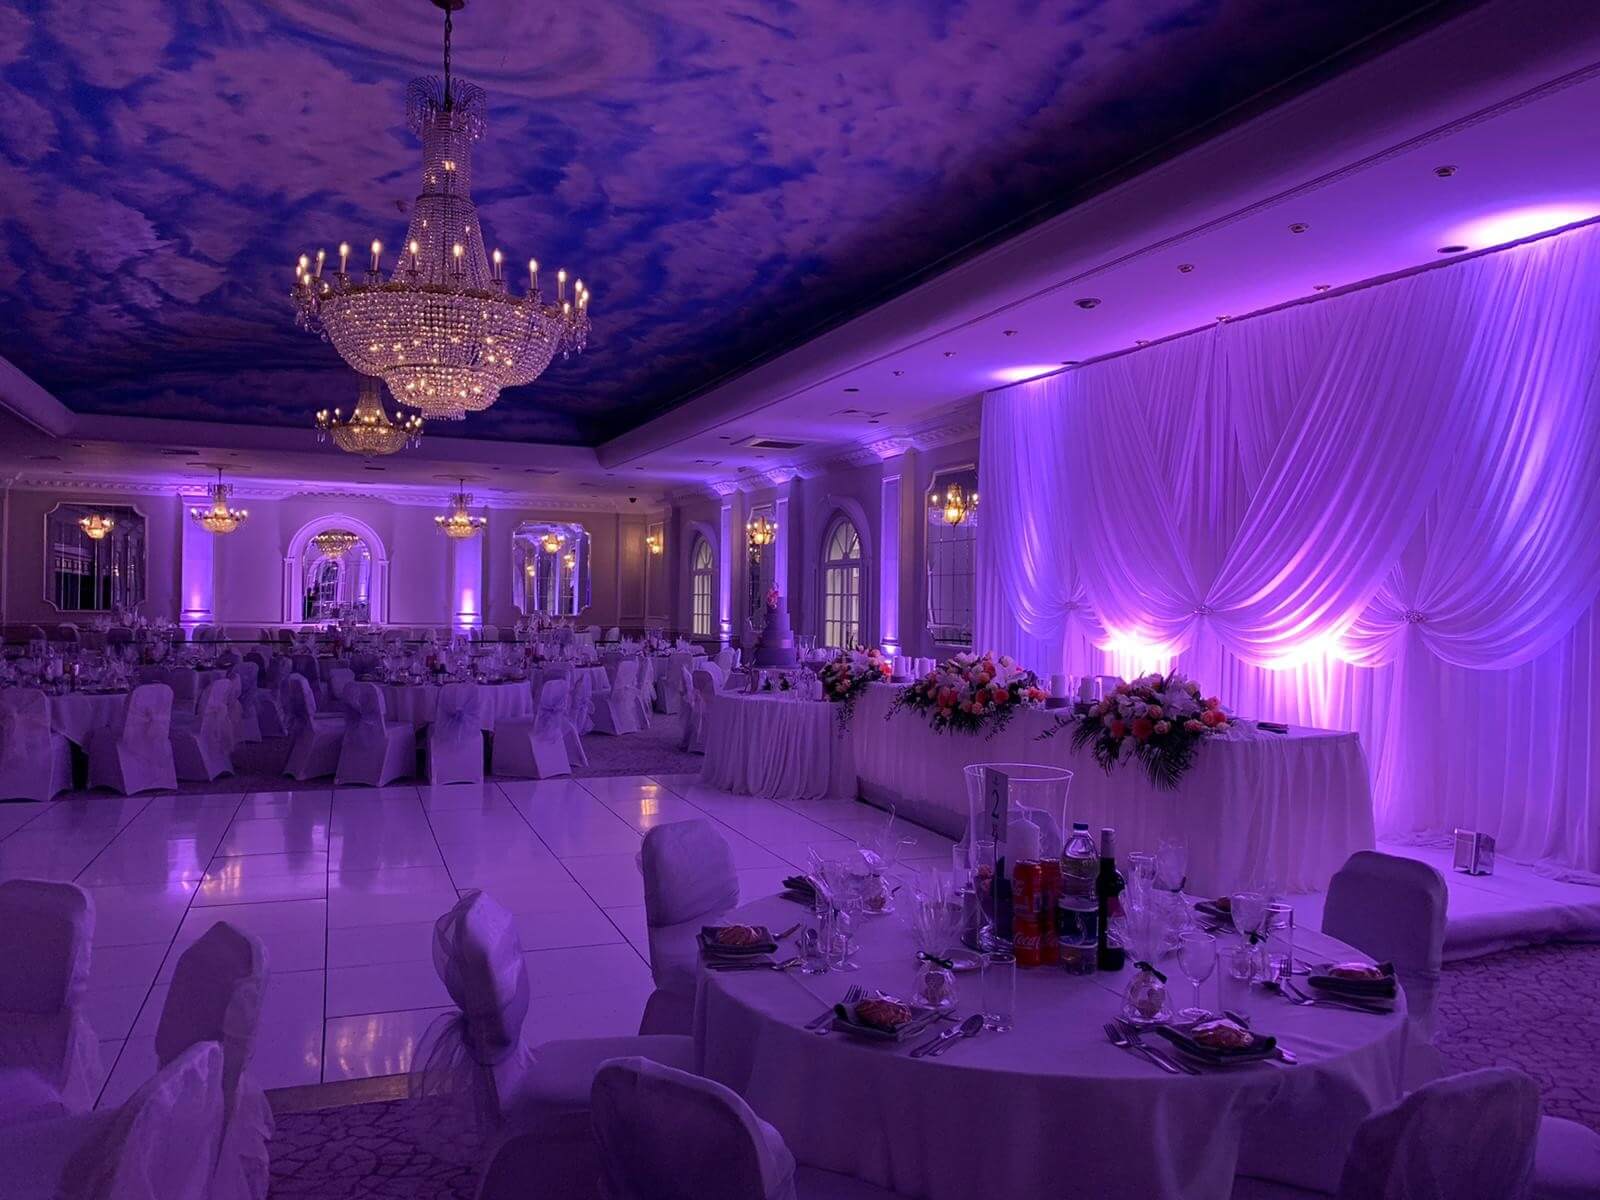  Regency Banqueting Suite Wedding Venues London and Corporate Events Venue